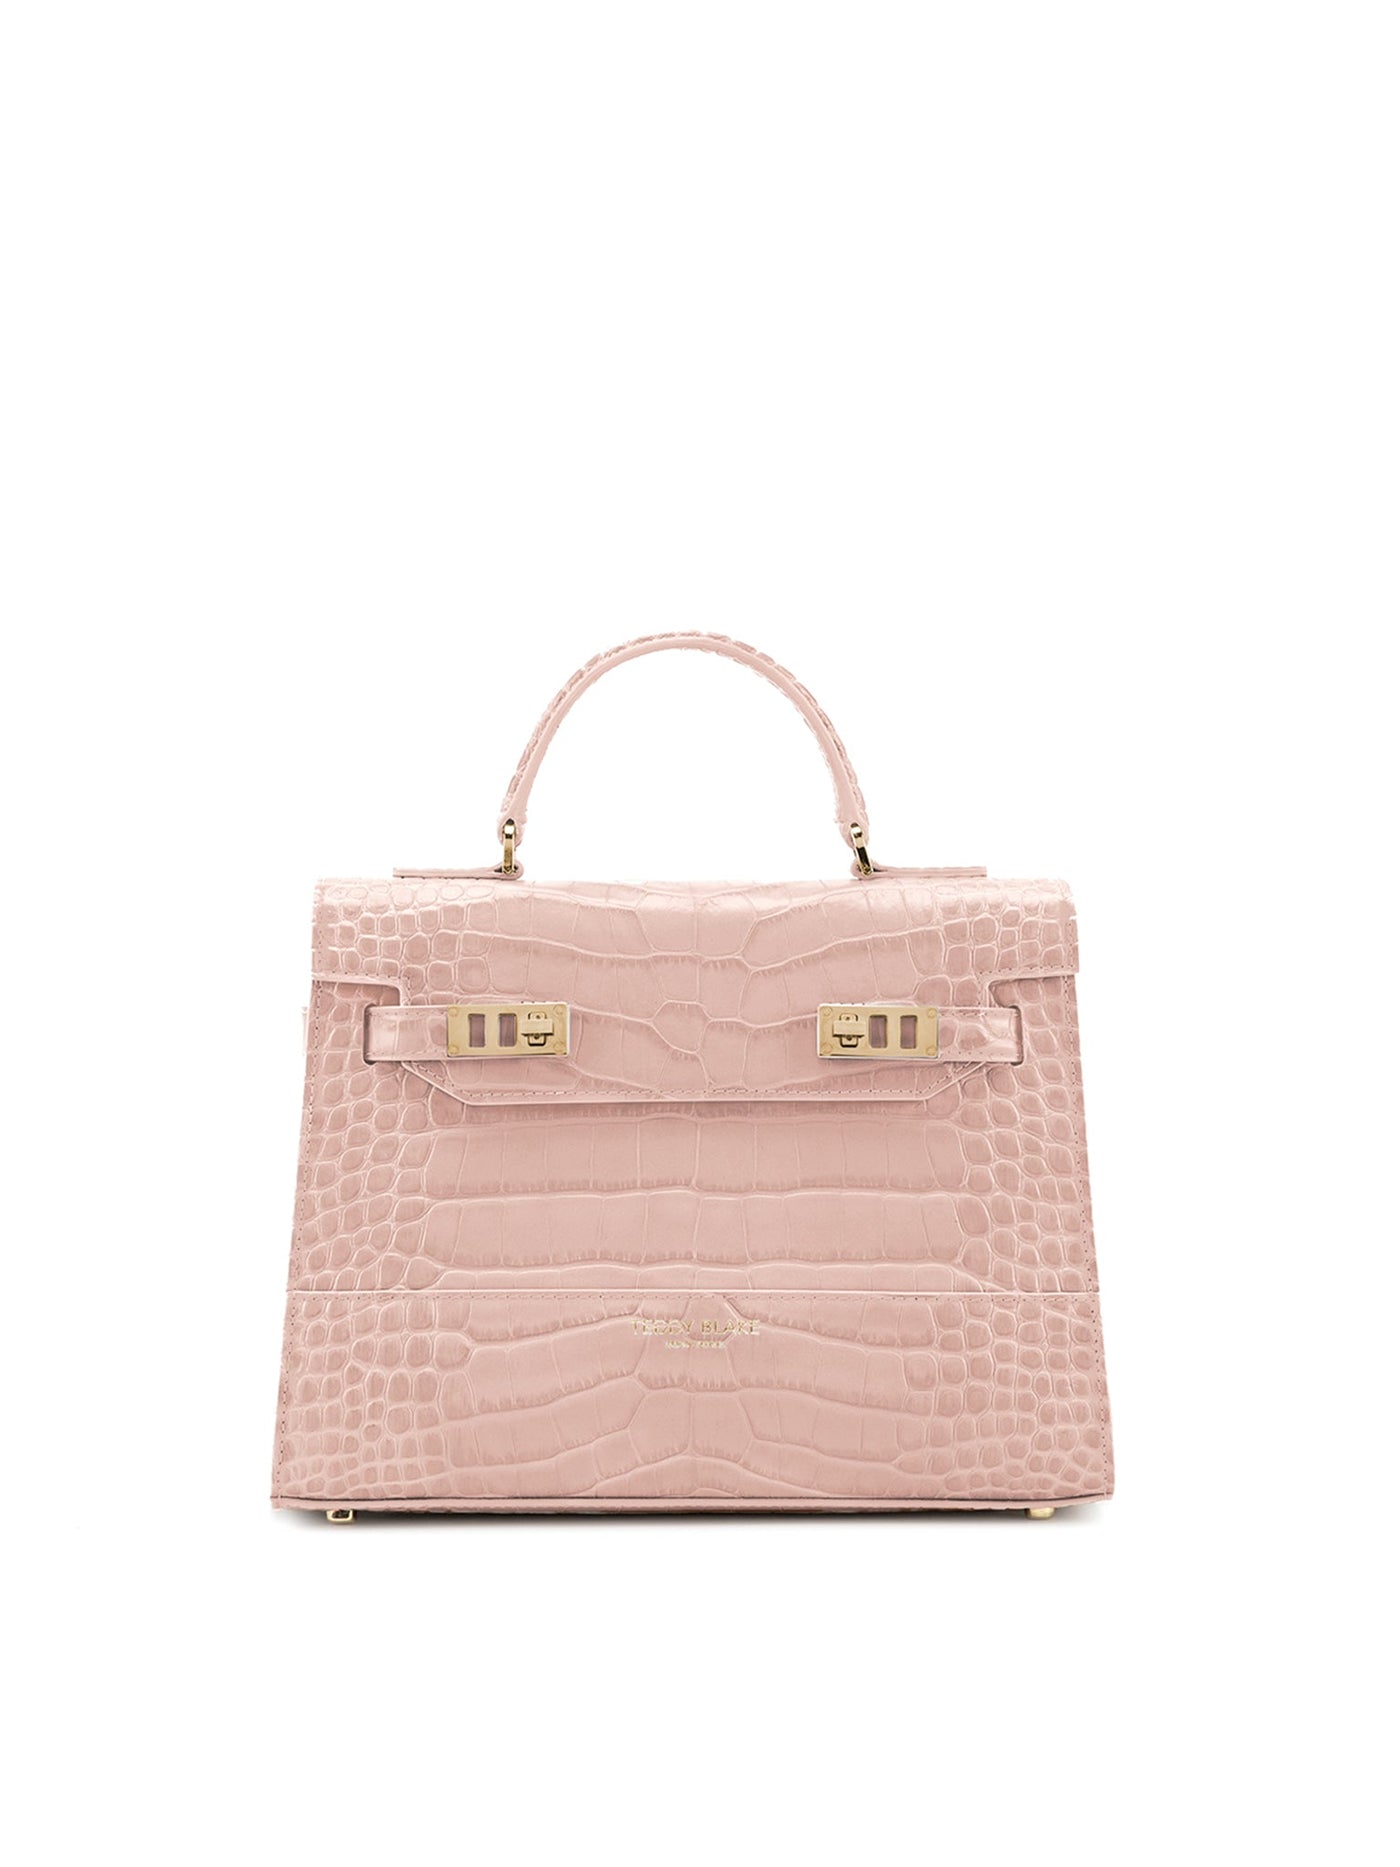 Pink crocodile skin handbag becomes world's most expensive at